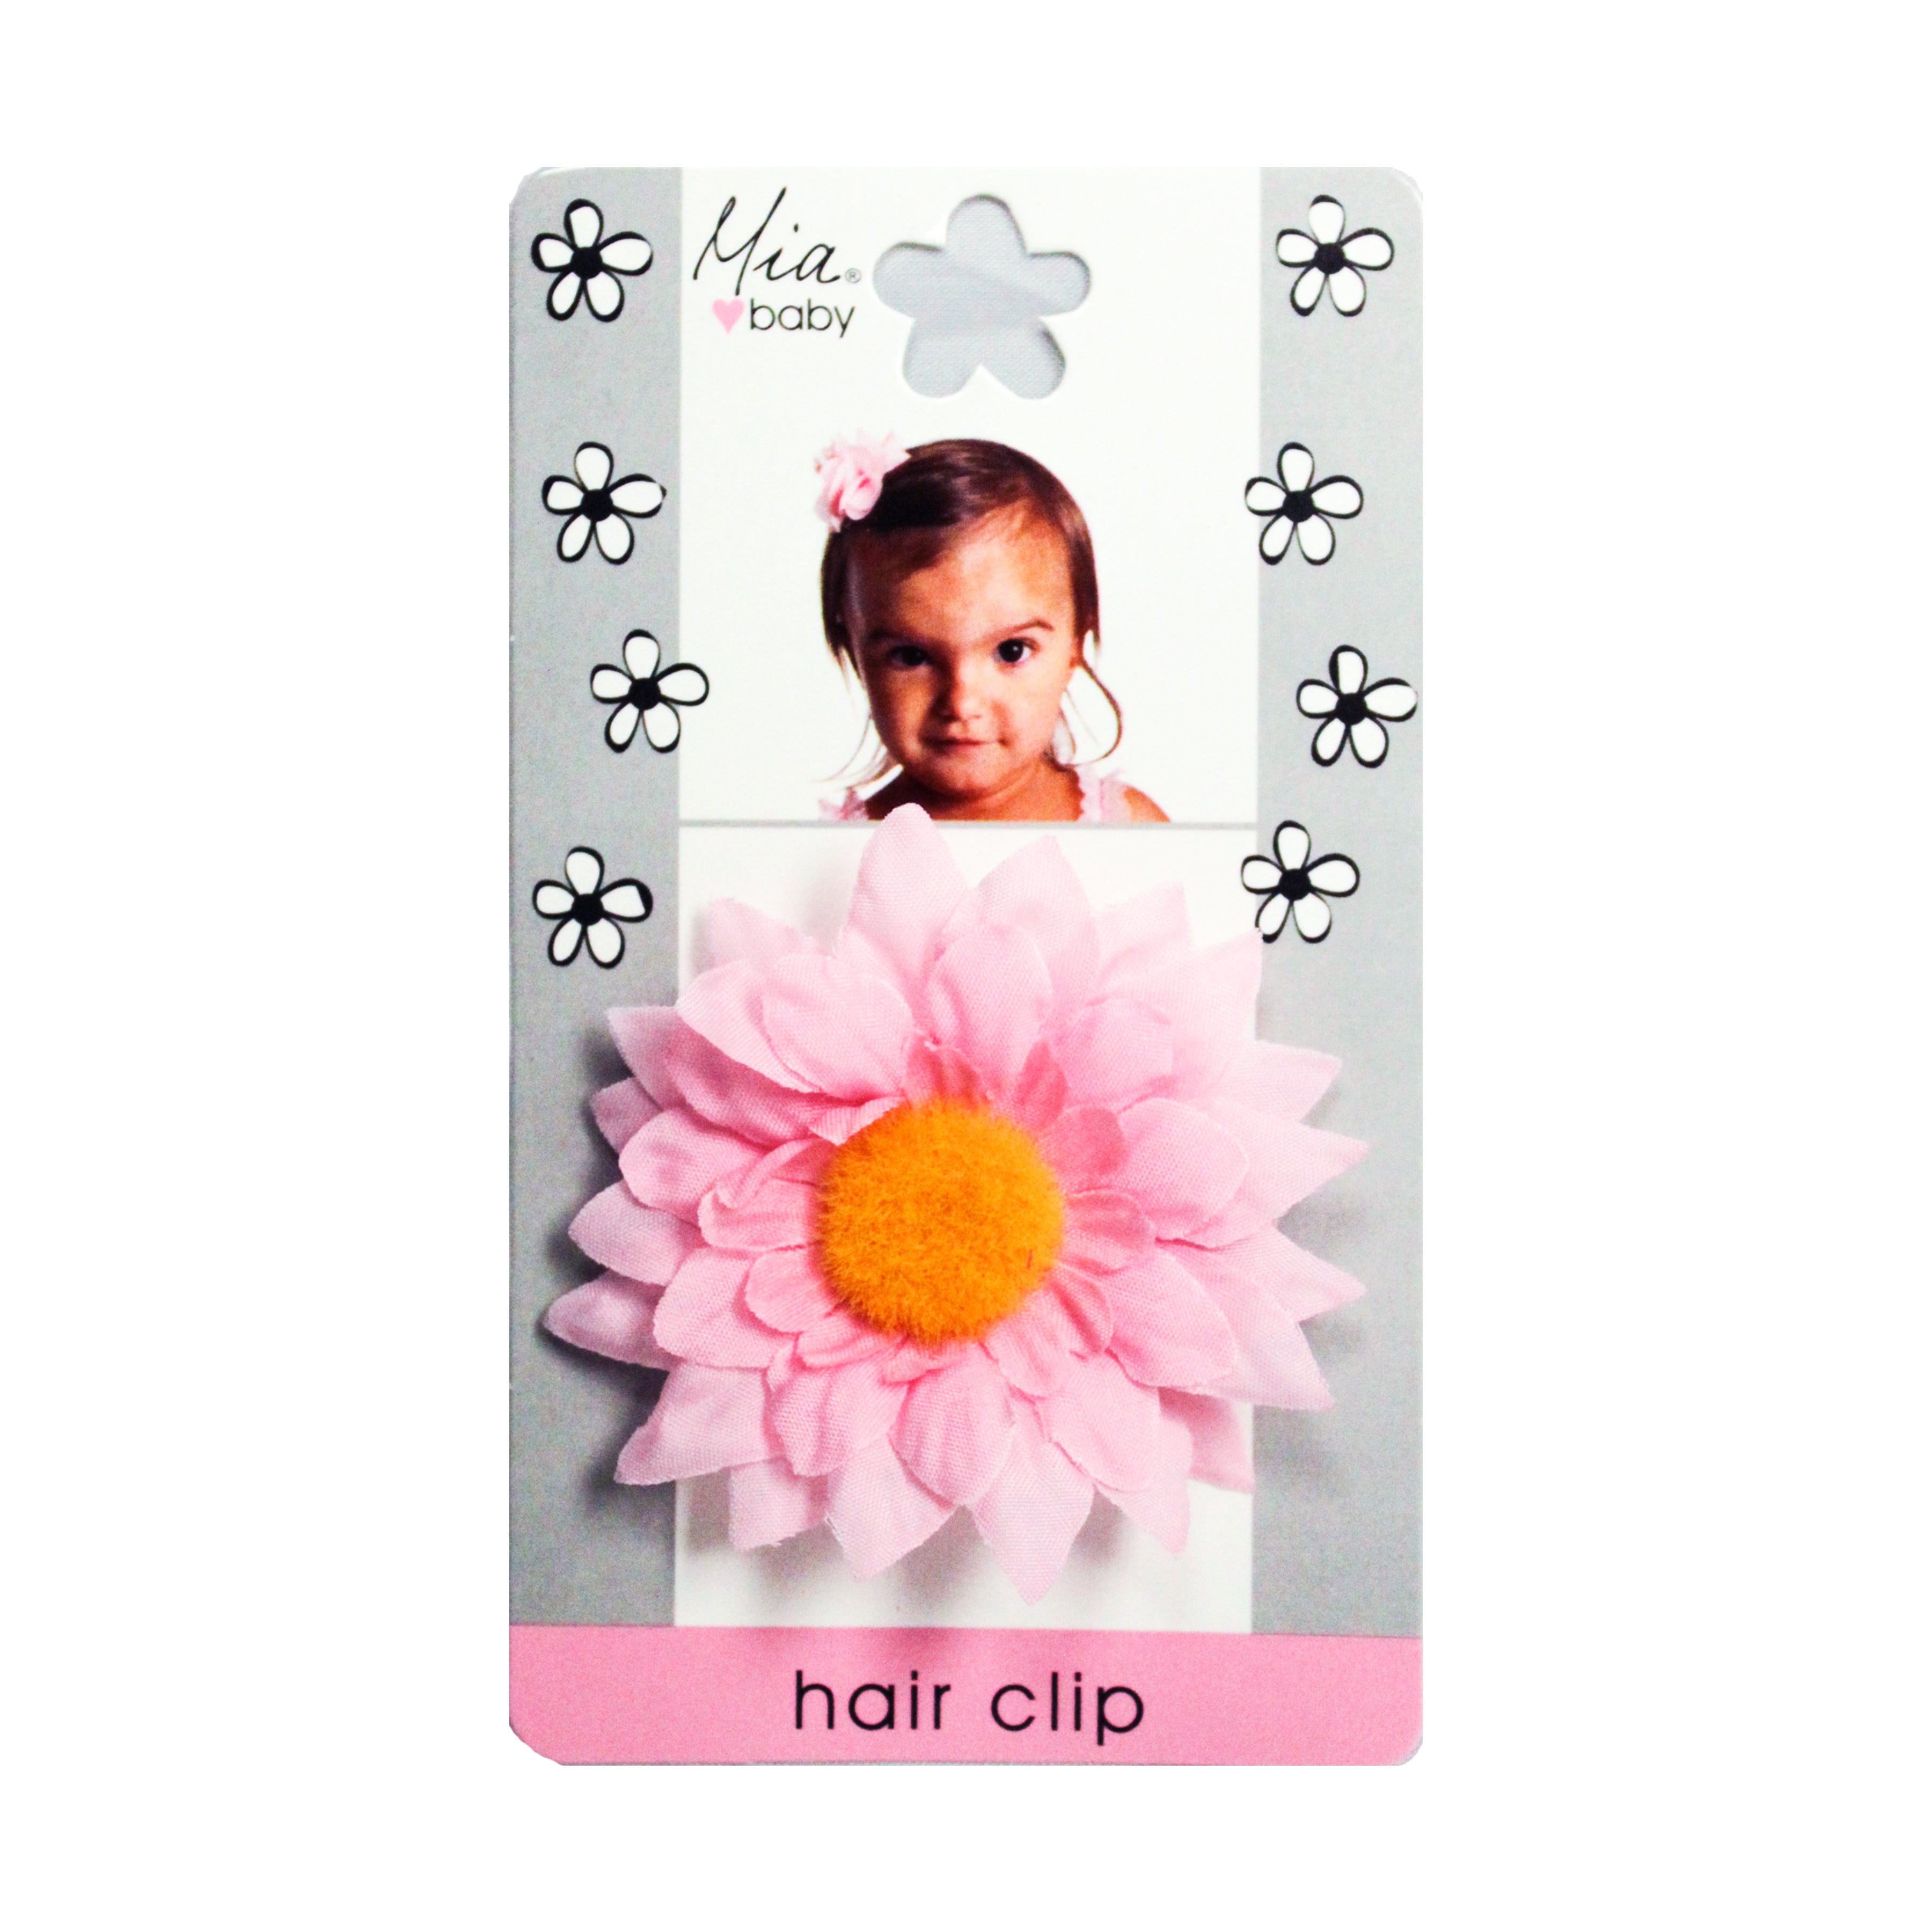 Mia® Baby Daisy Flower Barrette - light pink color - by #MiaKaminski #Mia #MiaBeauty #beauty #hair #HairAccessories #baby #girlhairaccessories #hairclips #hairbarrettes #barrette #lovethis #love #life #woman